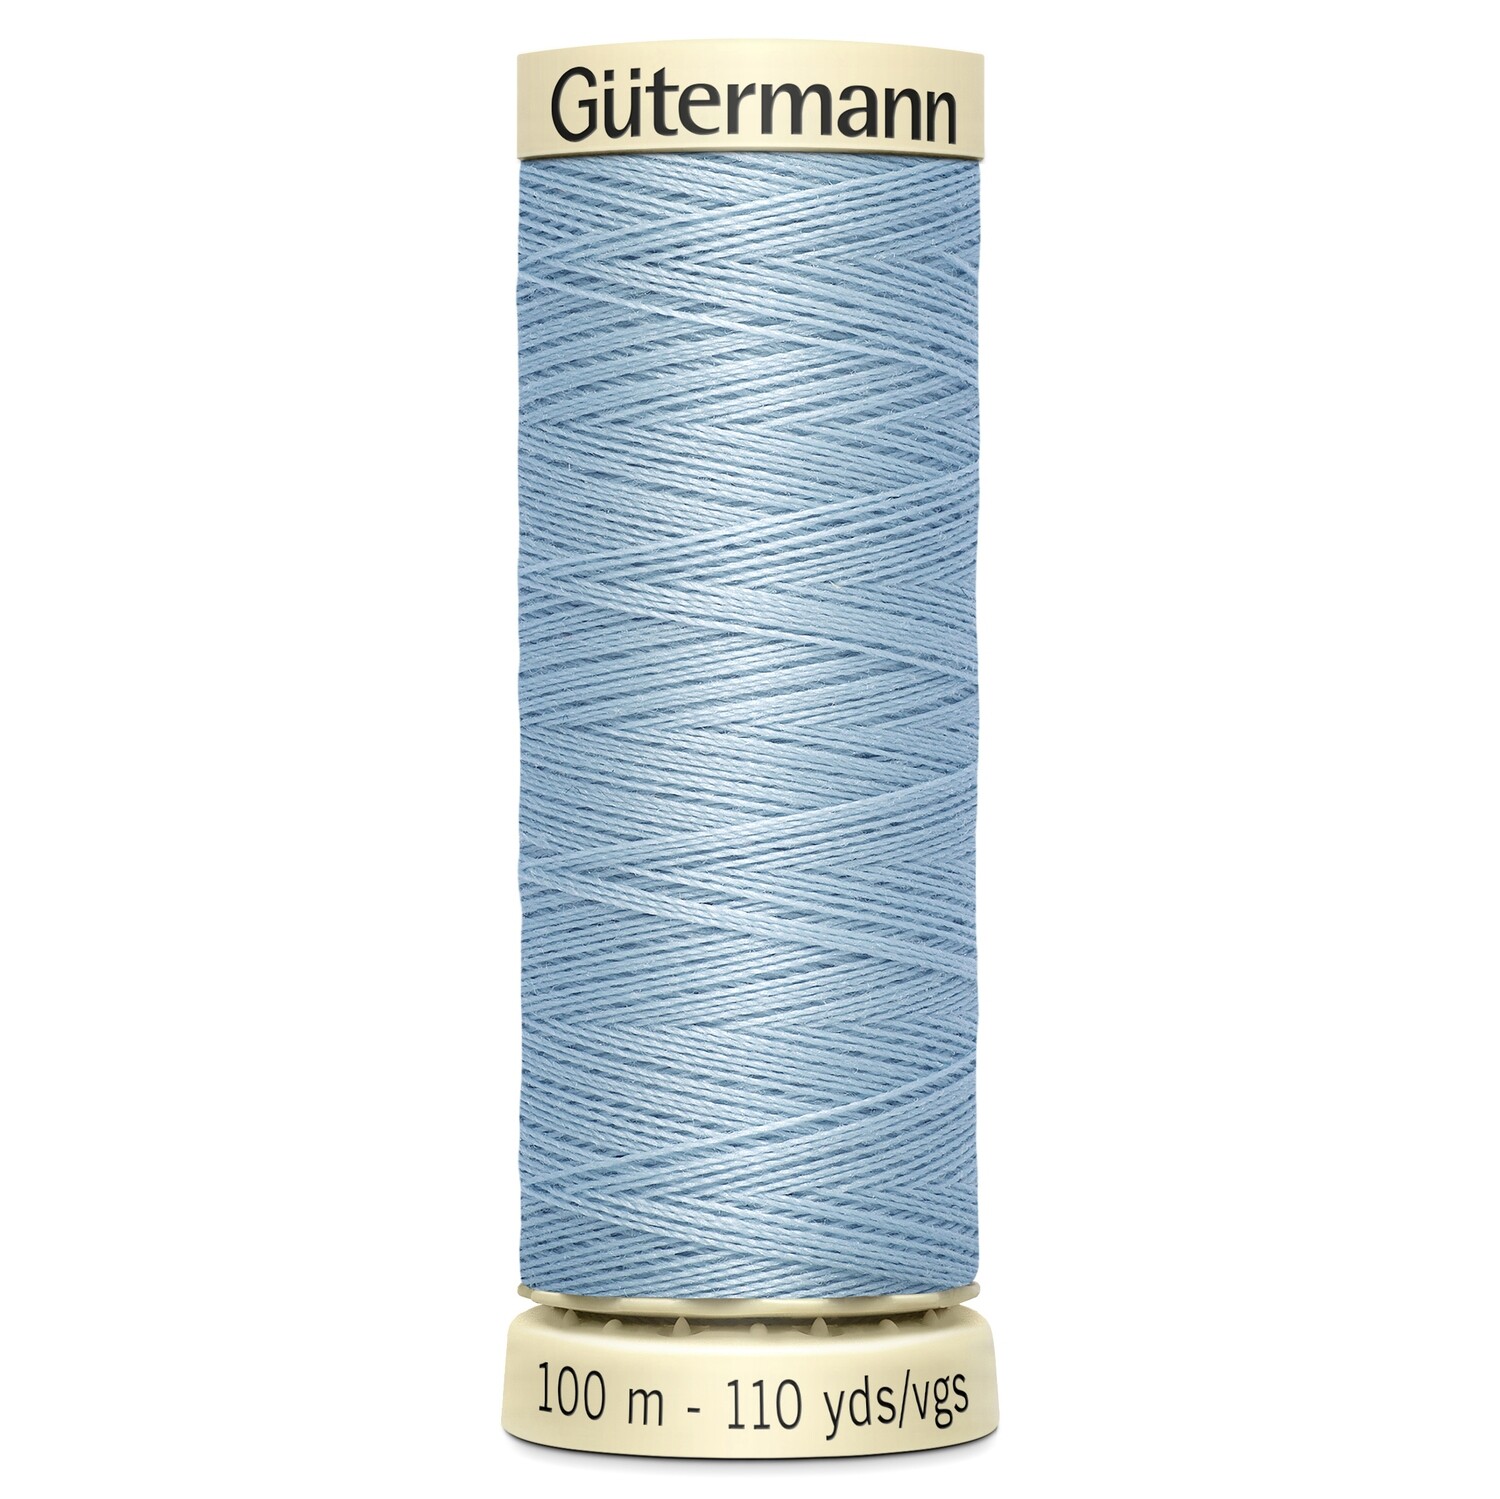 Gutermann Sew-All thread 75